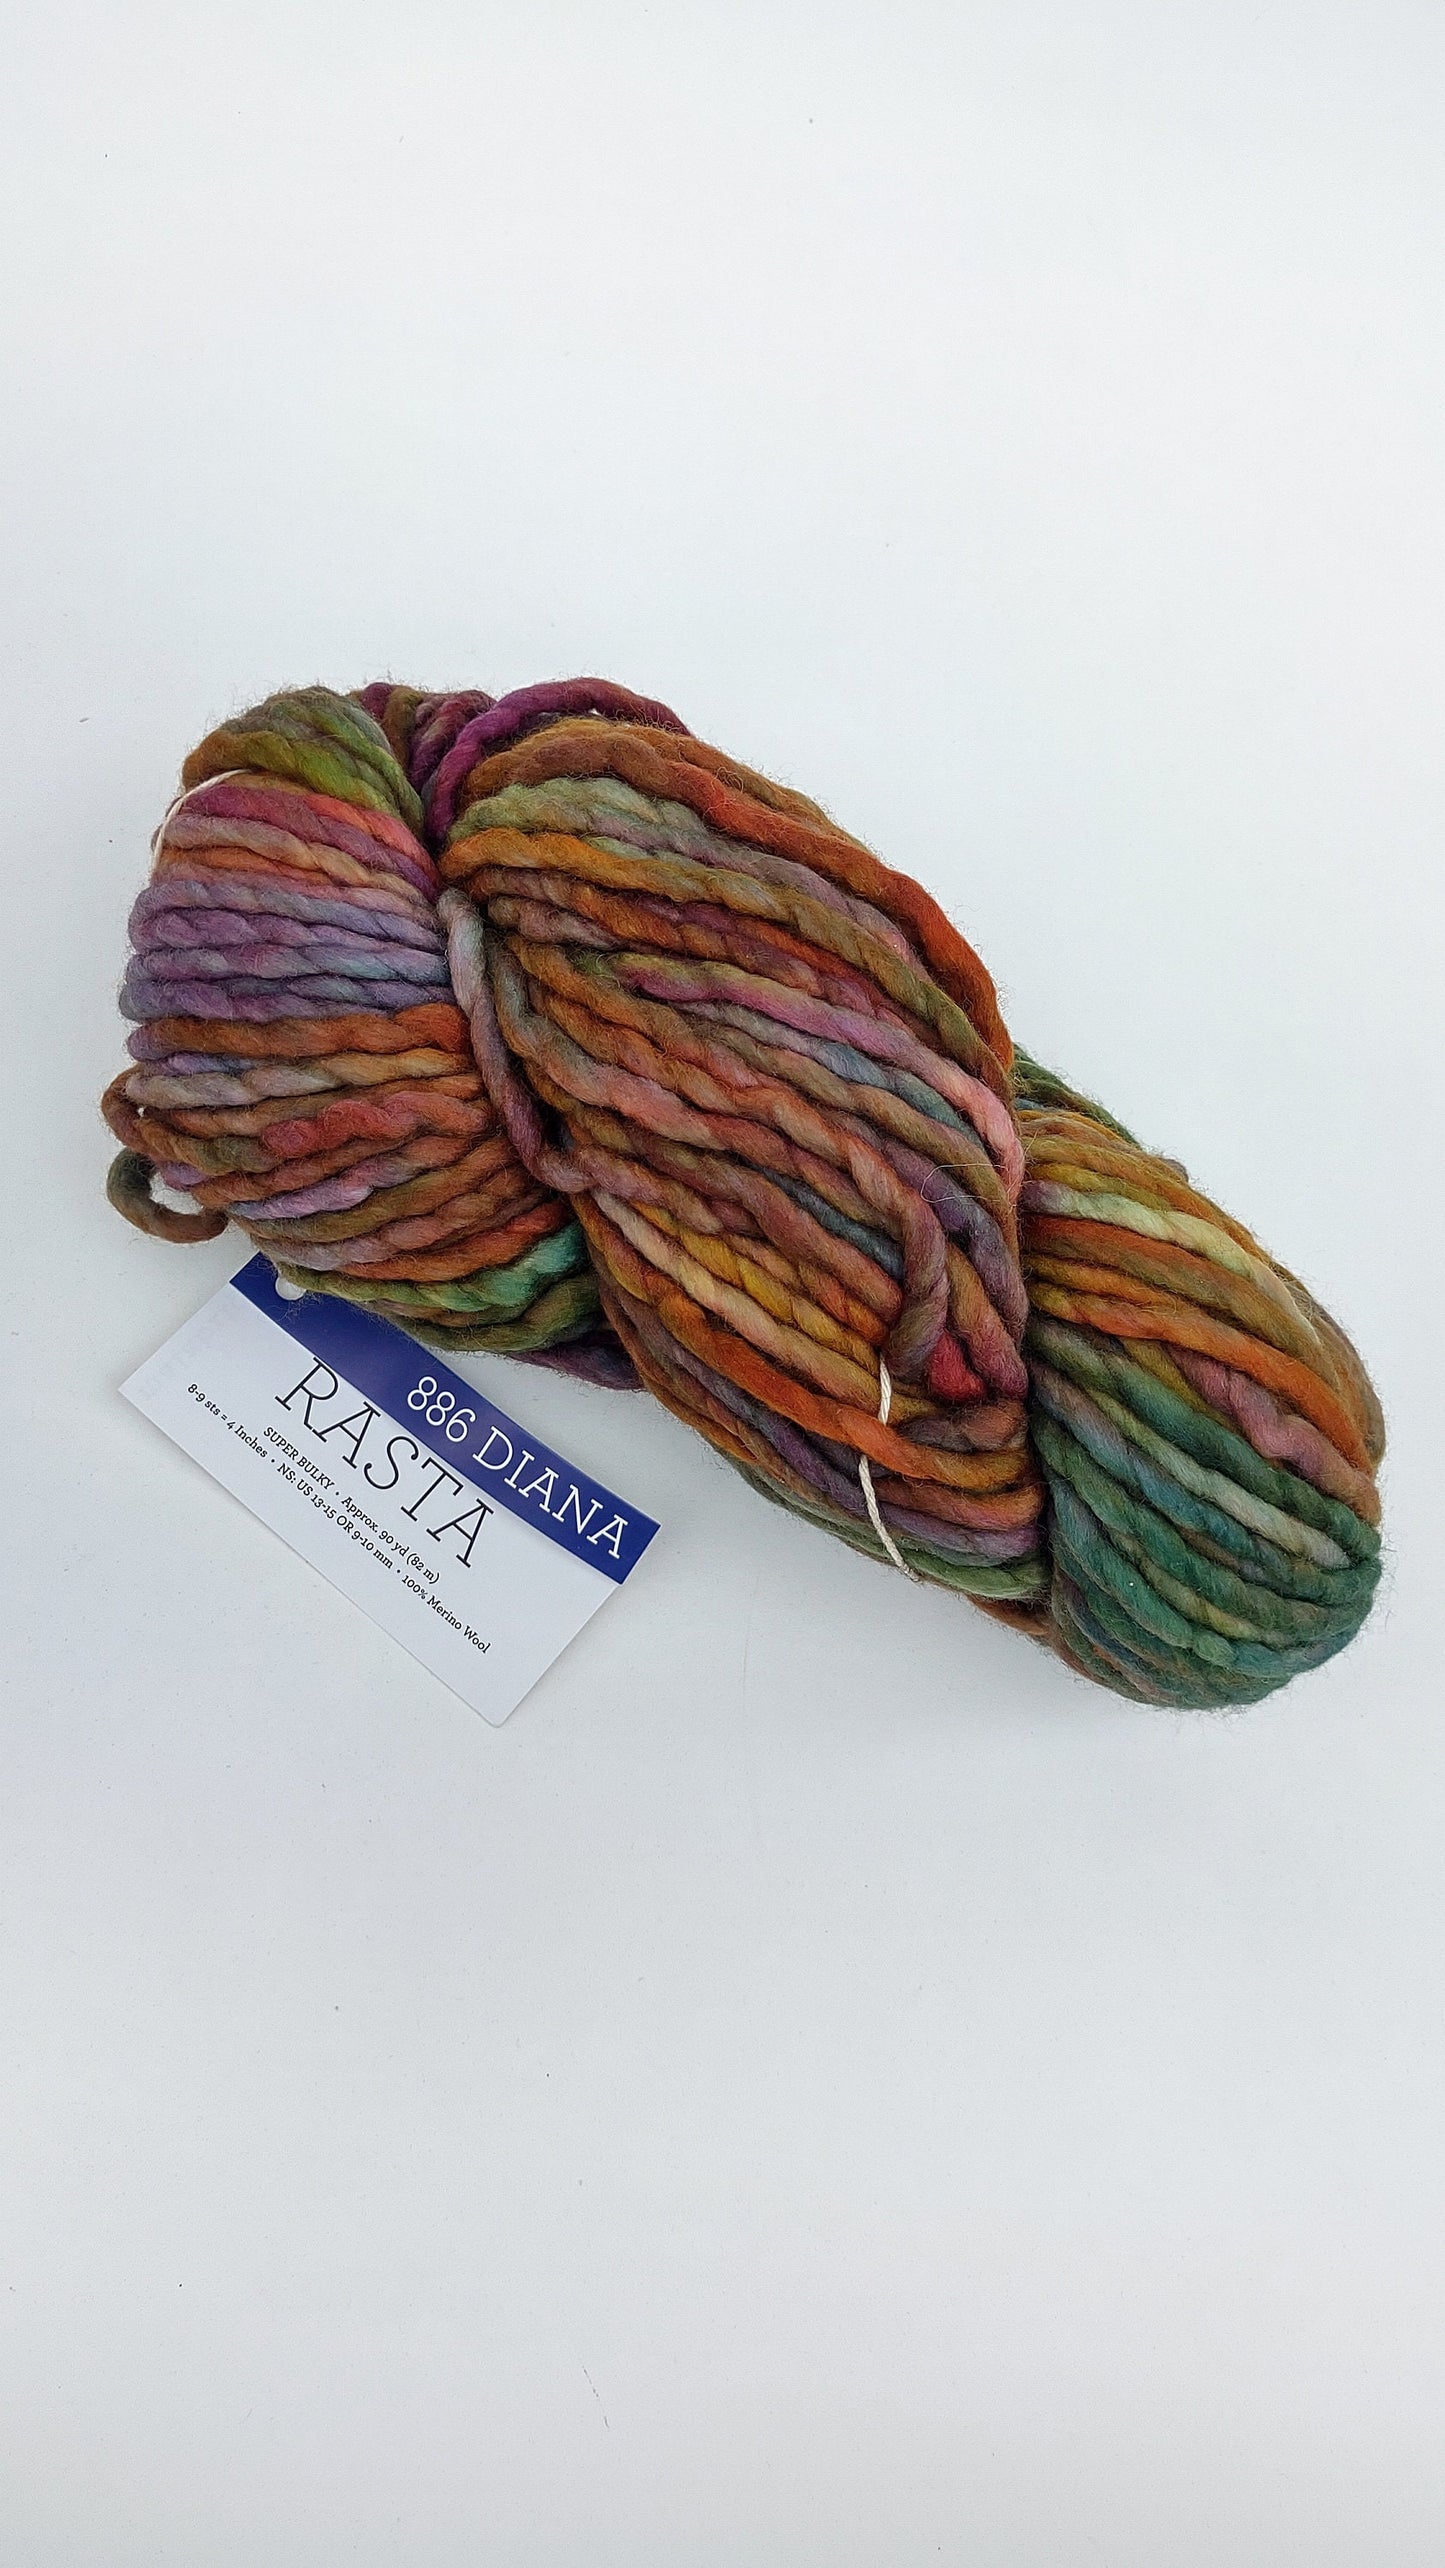 Malabrigo Rasta Yarn in color Diana. Merino Wool. Soft Warm Yarn. Variegated Yarn. Knitting Crochet Wool. Autumn Rainbow Colors. Knit Kit